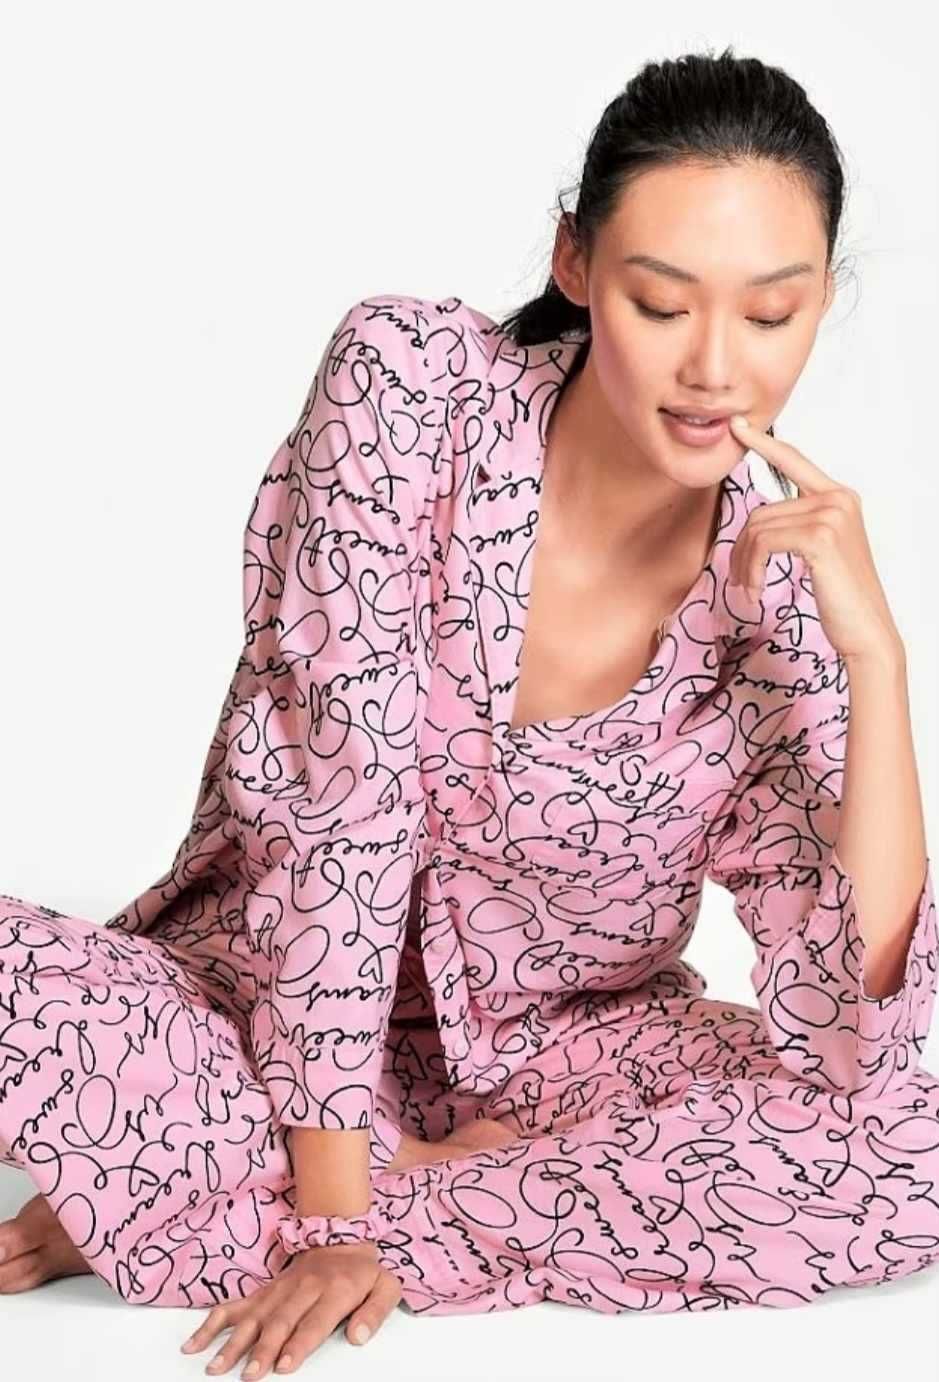 Pijama Victoria's Secret roz confortabile originale